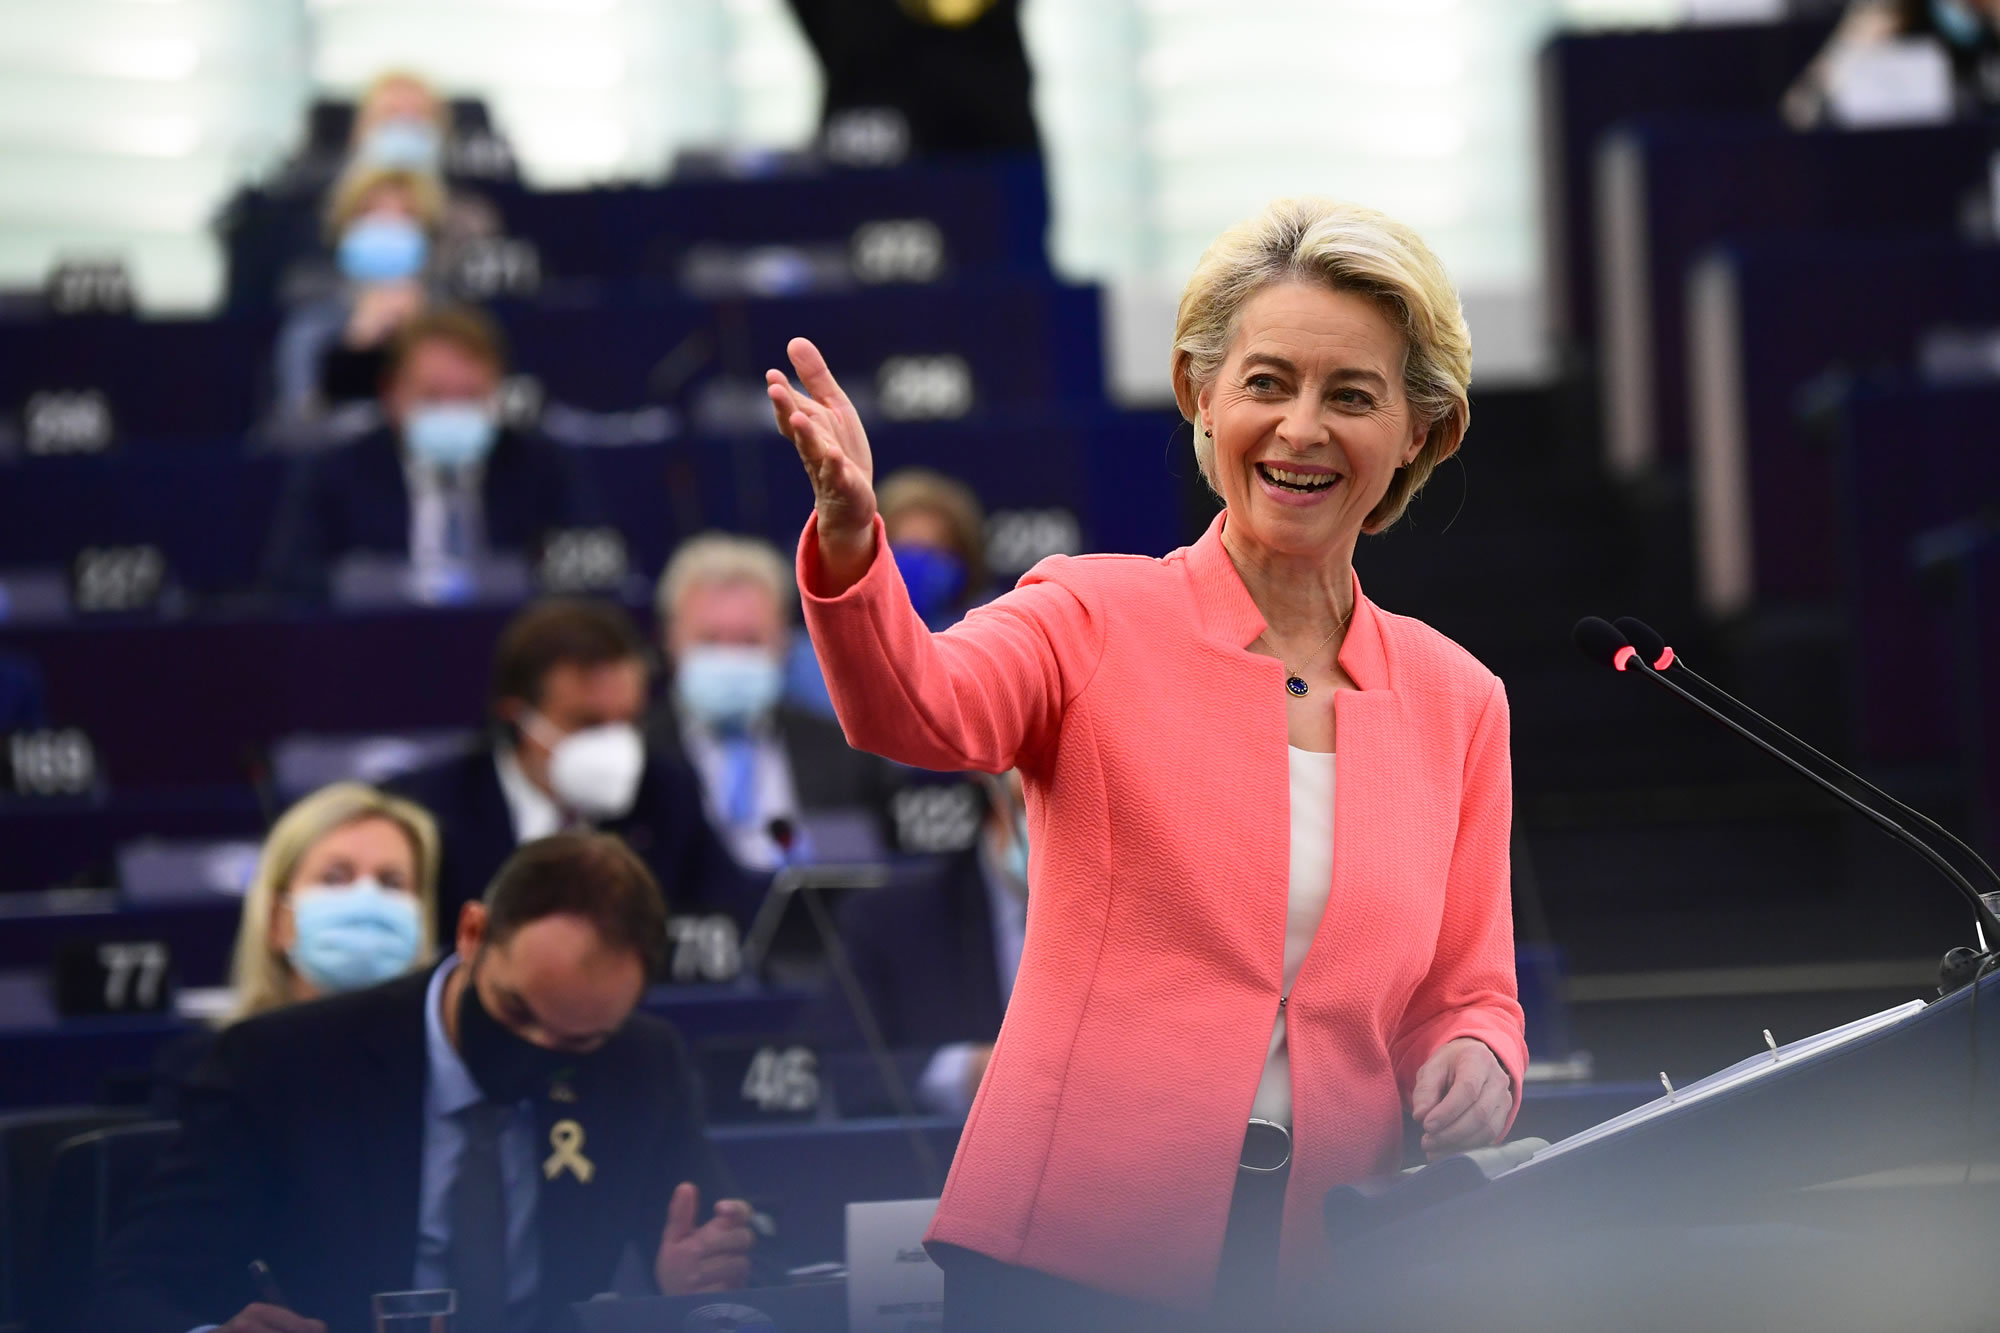 Ursula von der Leyen z nasmehom stoji na odru in z dvignjeno roko gestikulira občinstvu.